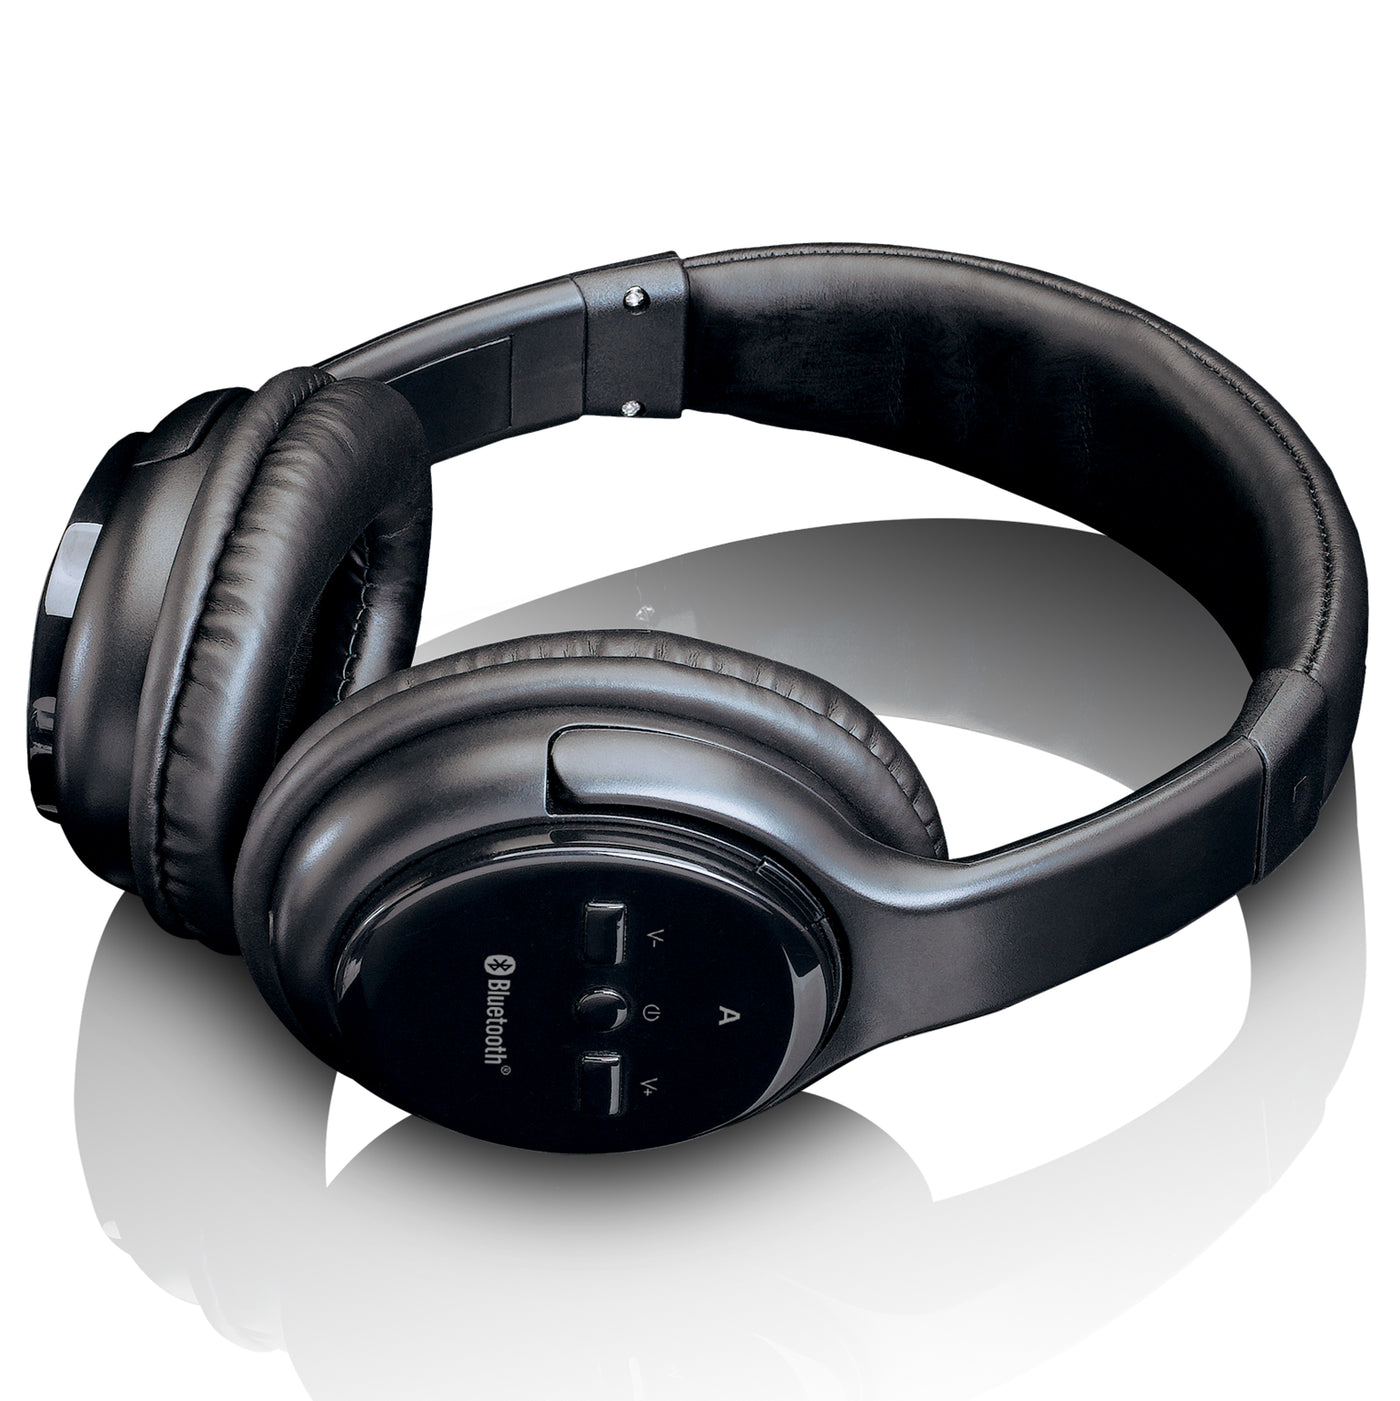 LENCO DVP-1047, Portable DVD Player - 10 inch - Bluetooth® headphone